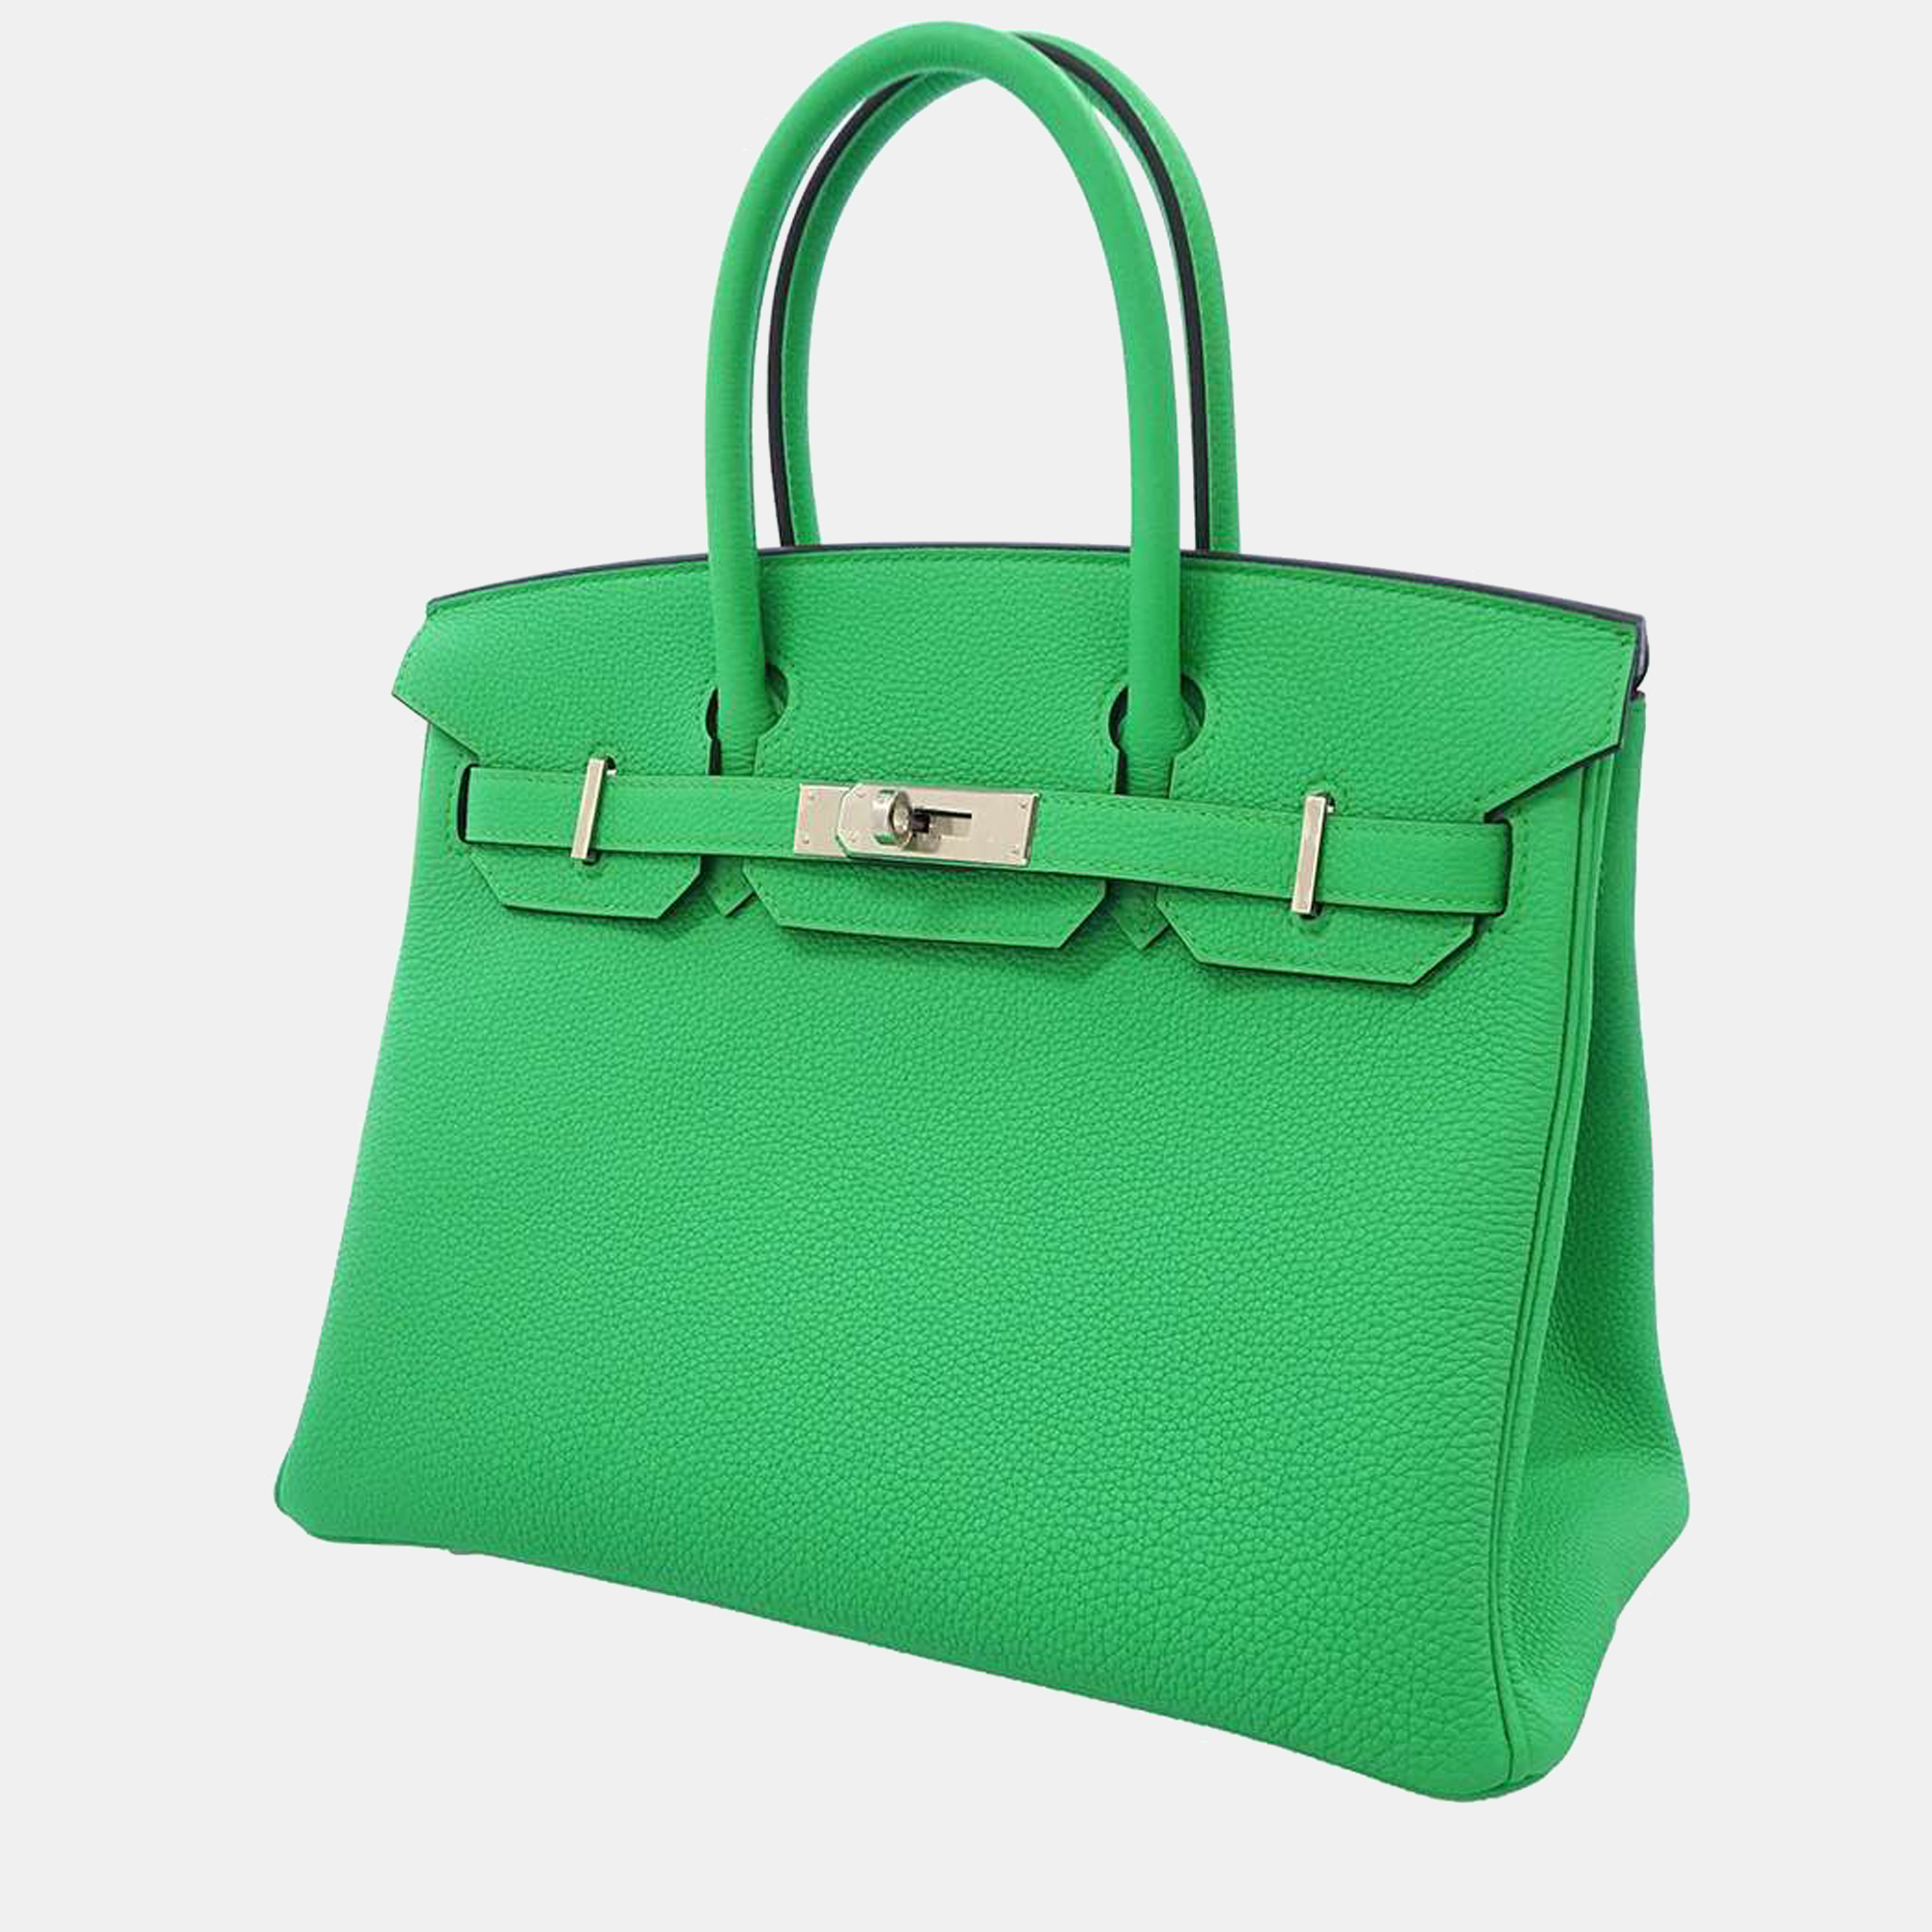 Hermes Green Togo Leather Palladium Hardware Birkin 30 Bag